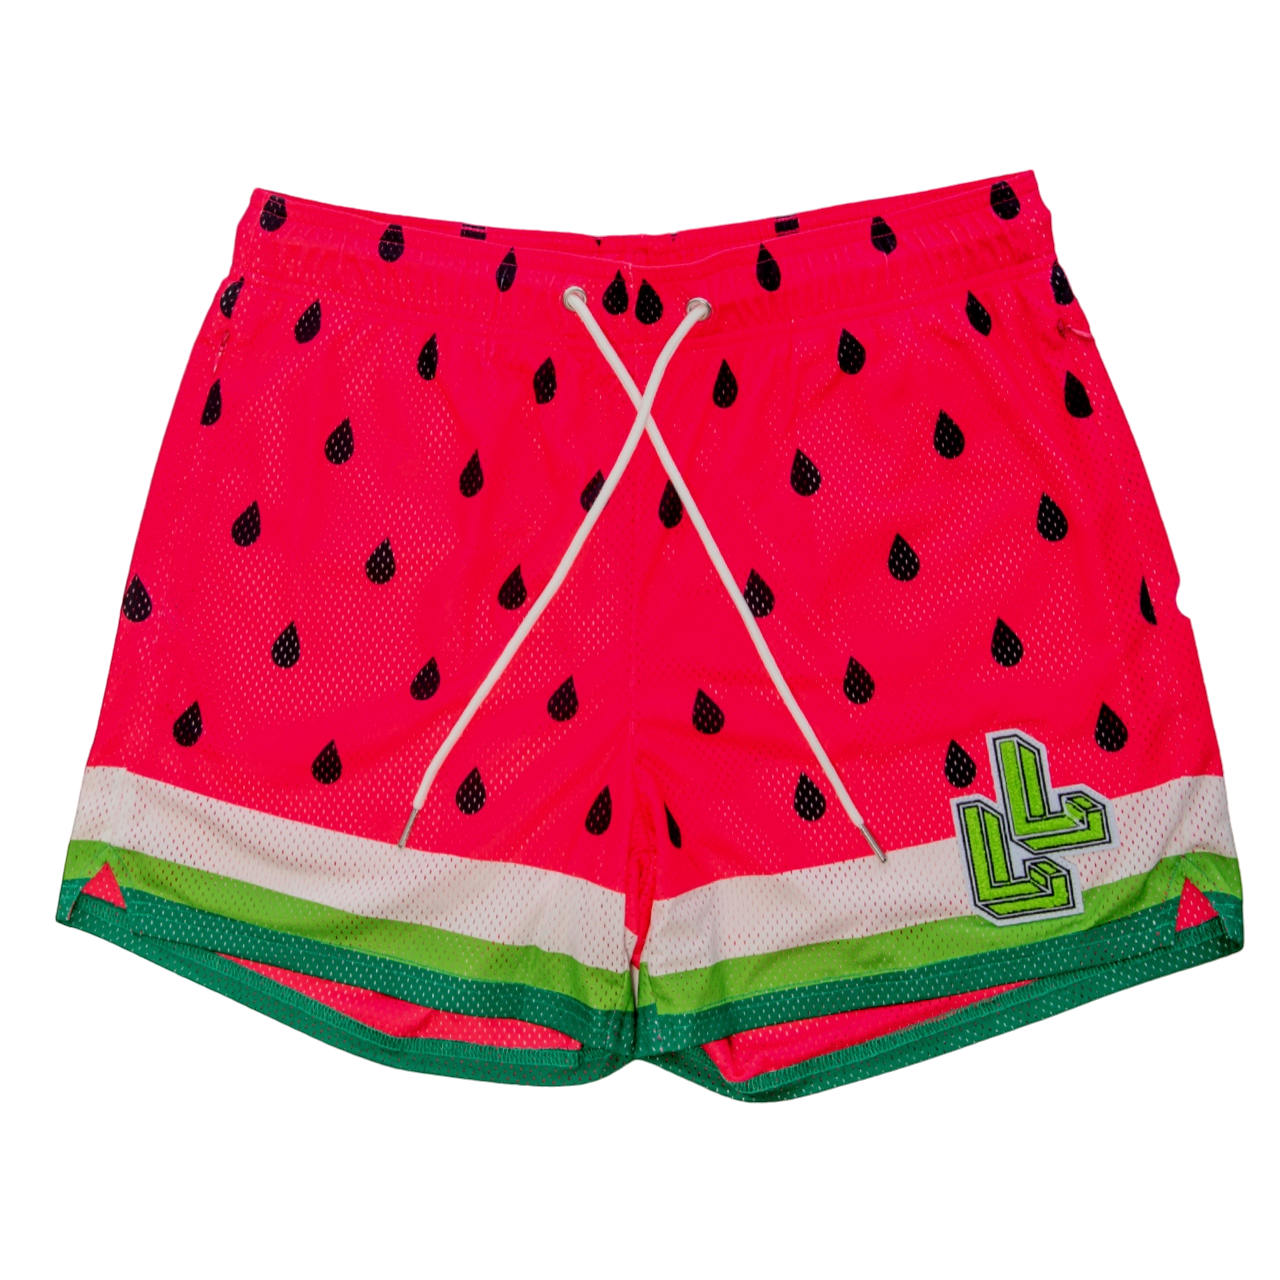 Watermelon workout shorts